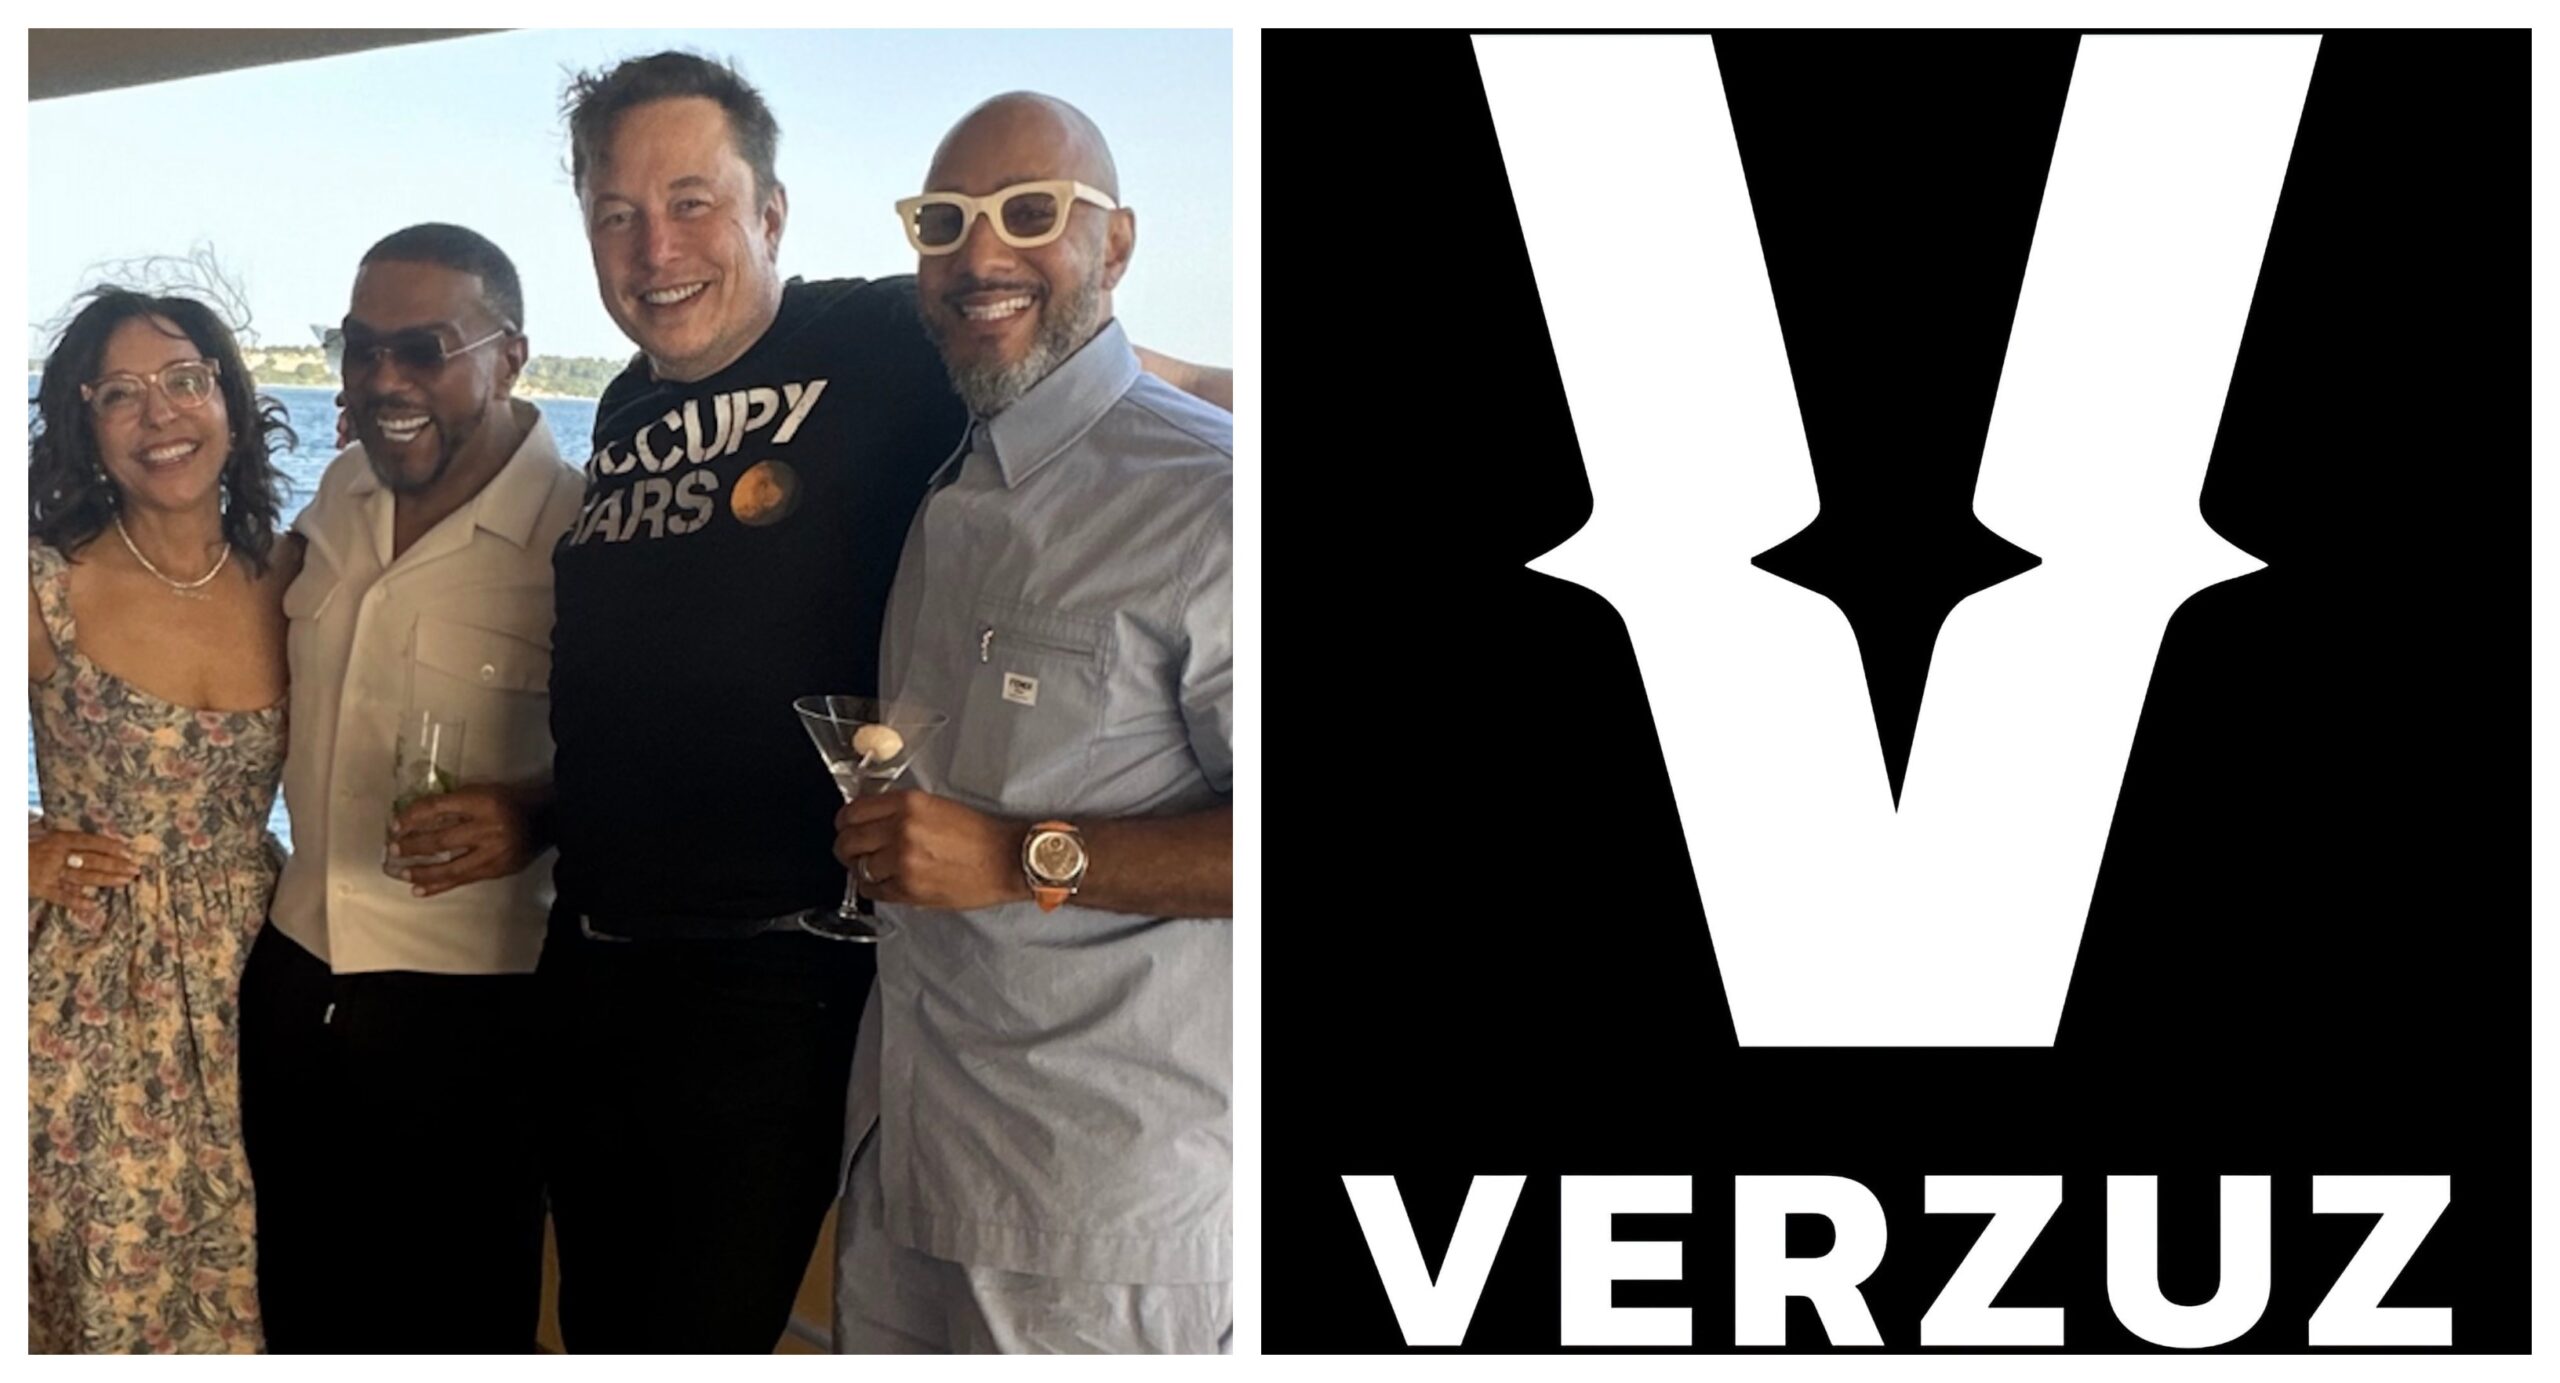 VERZUZ Founders Timbaland & Swizz Beatz Sign Exclusive Deal with Elon Musk’s X